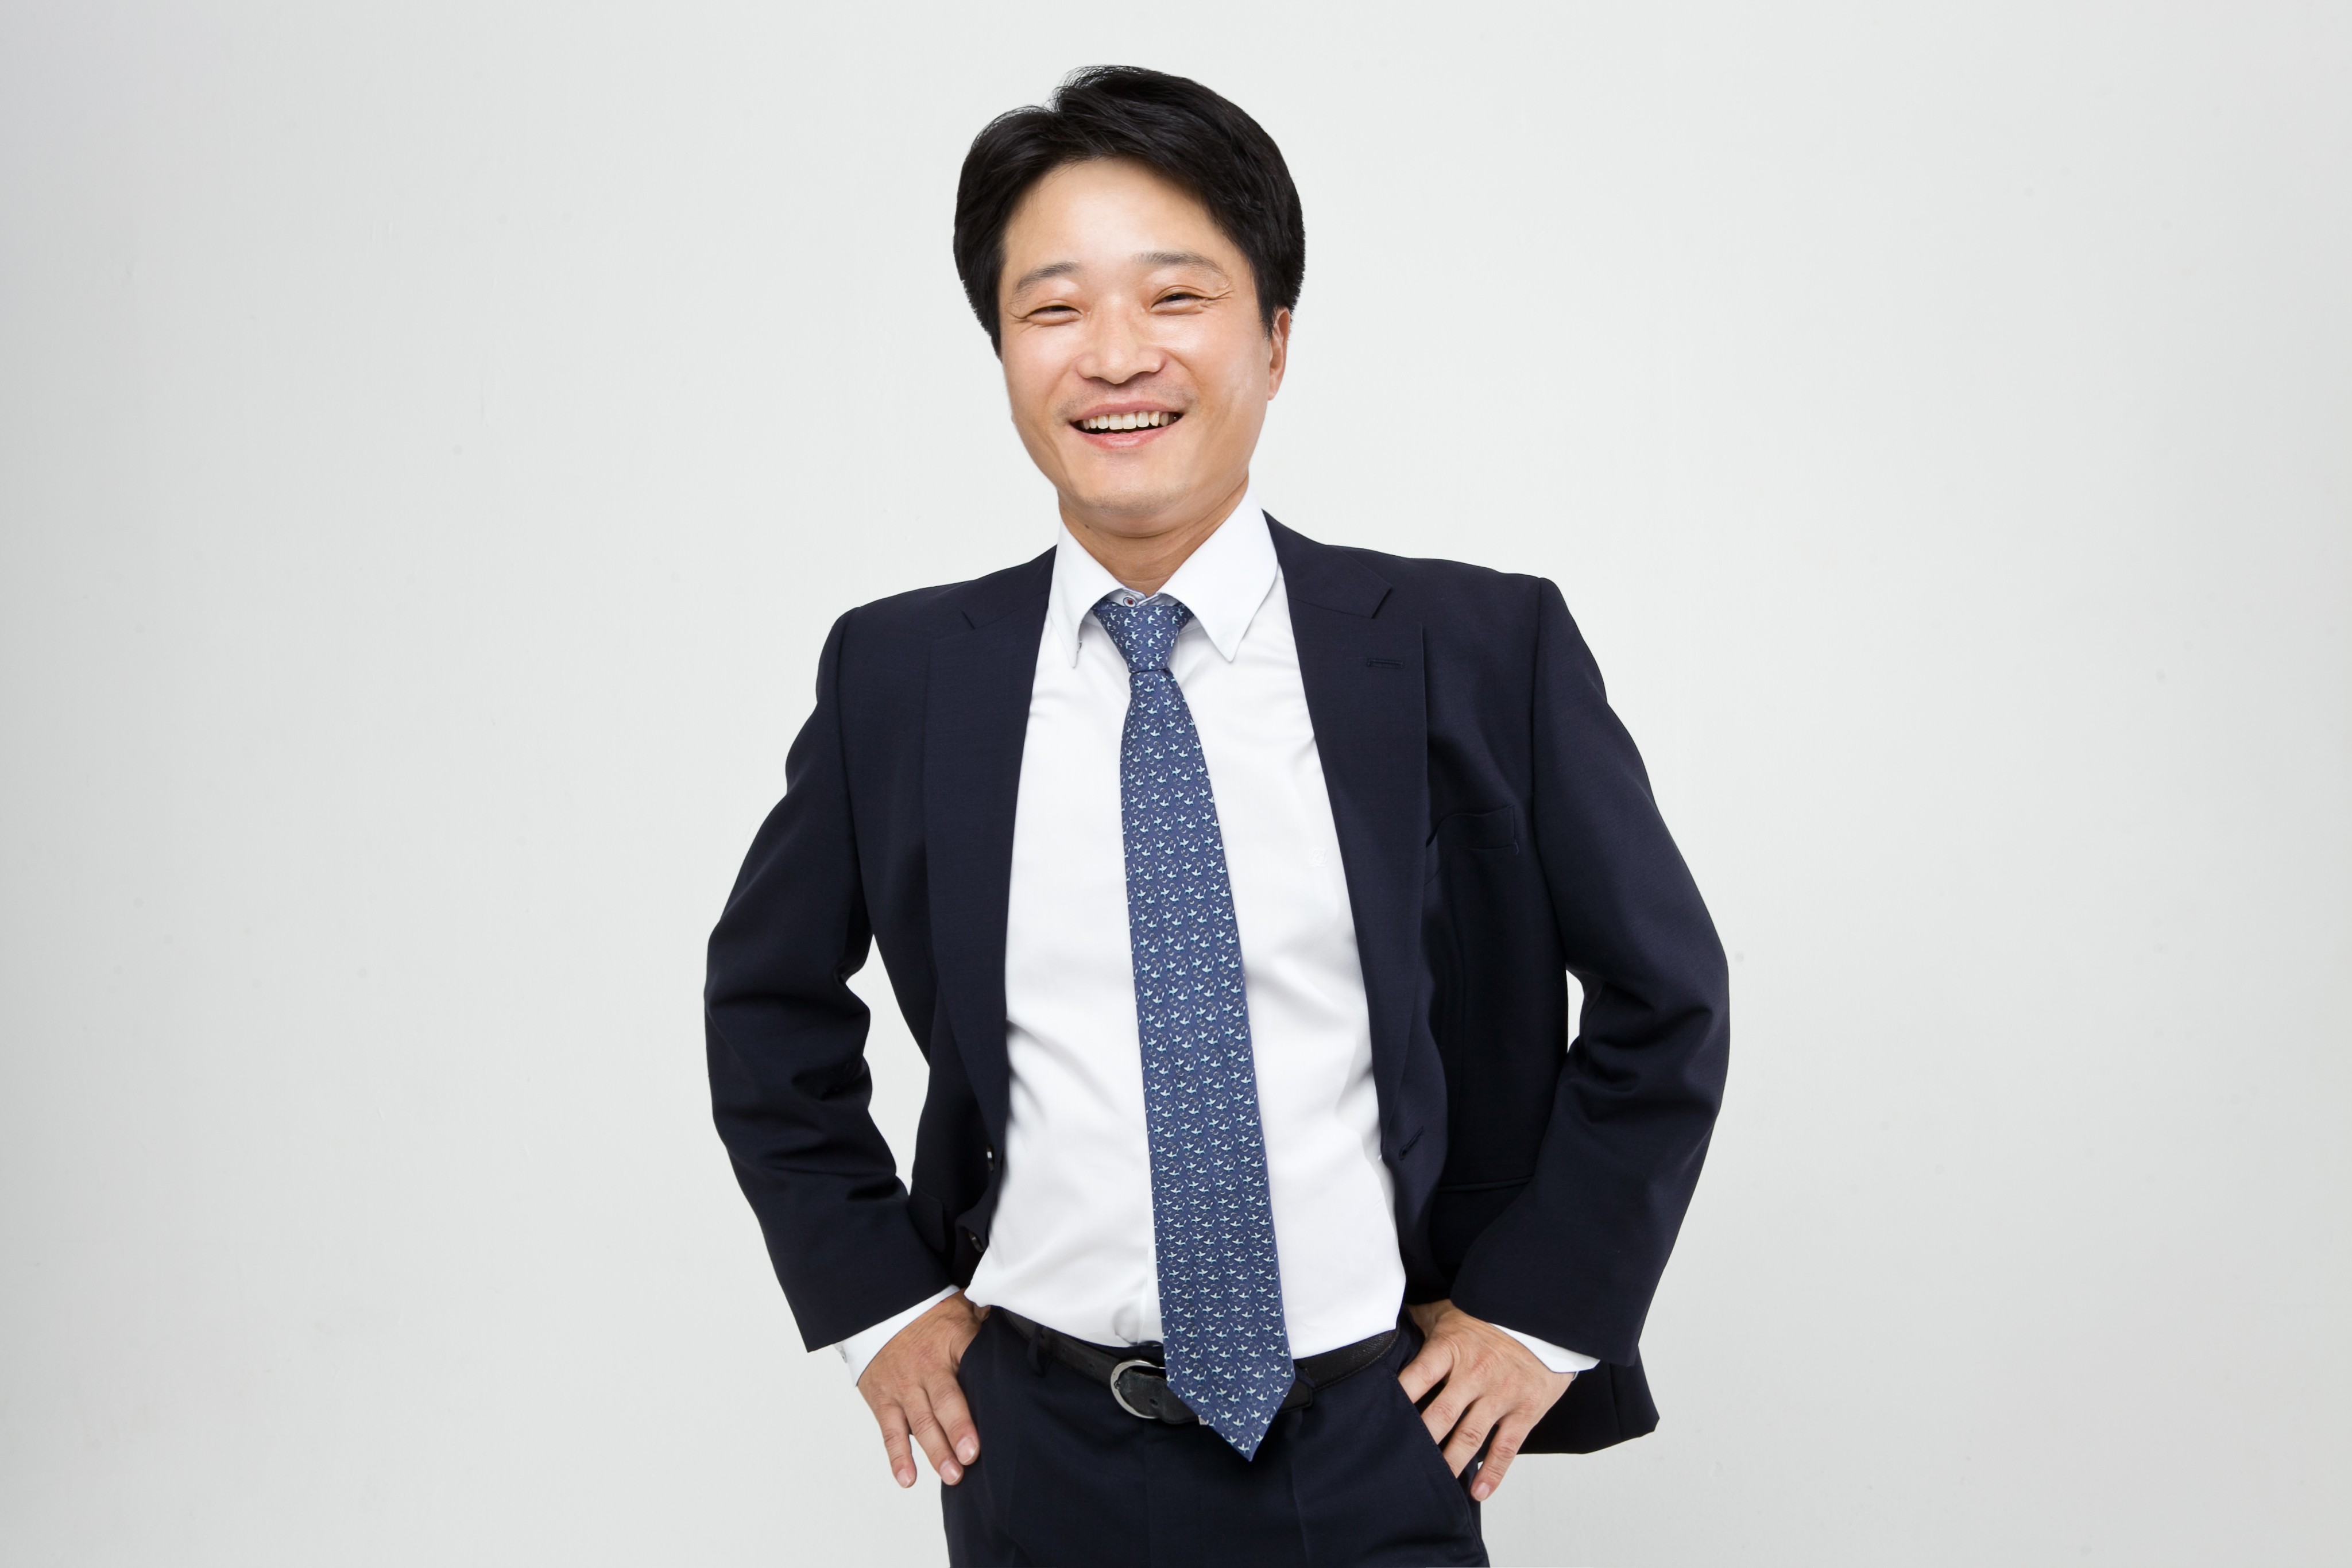 Jason Kim, CEO